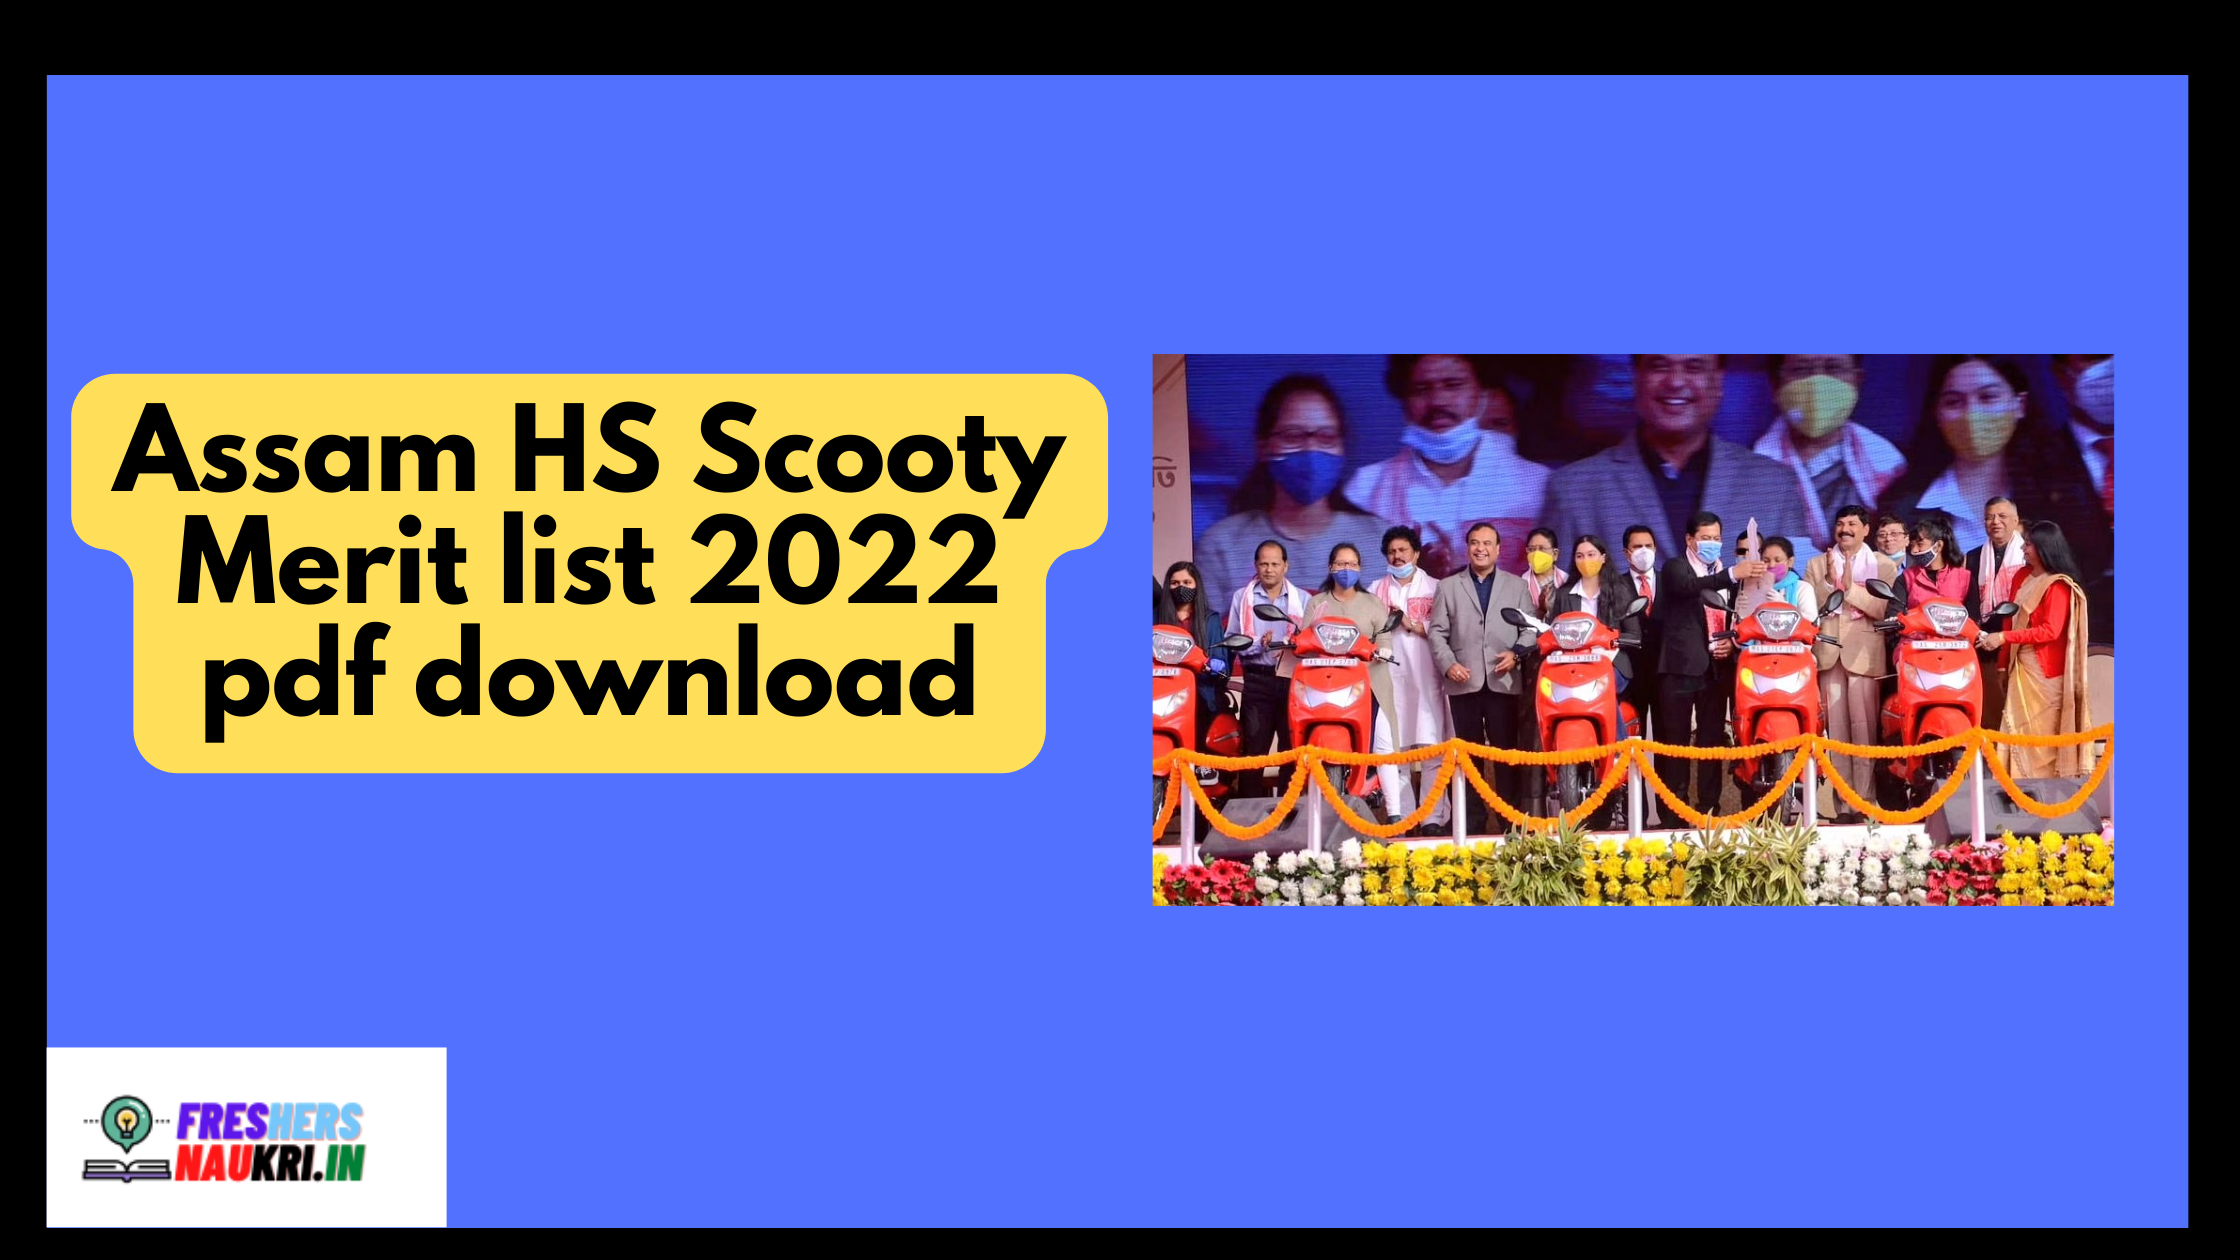 Assam HS Scooty Merit list 2022 pdf download